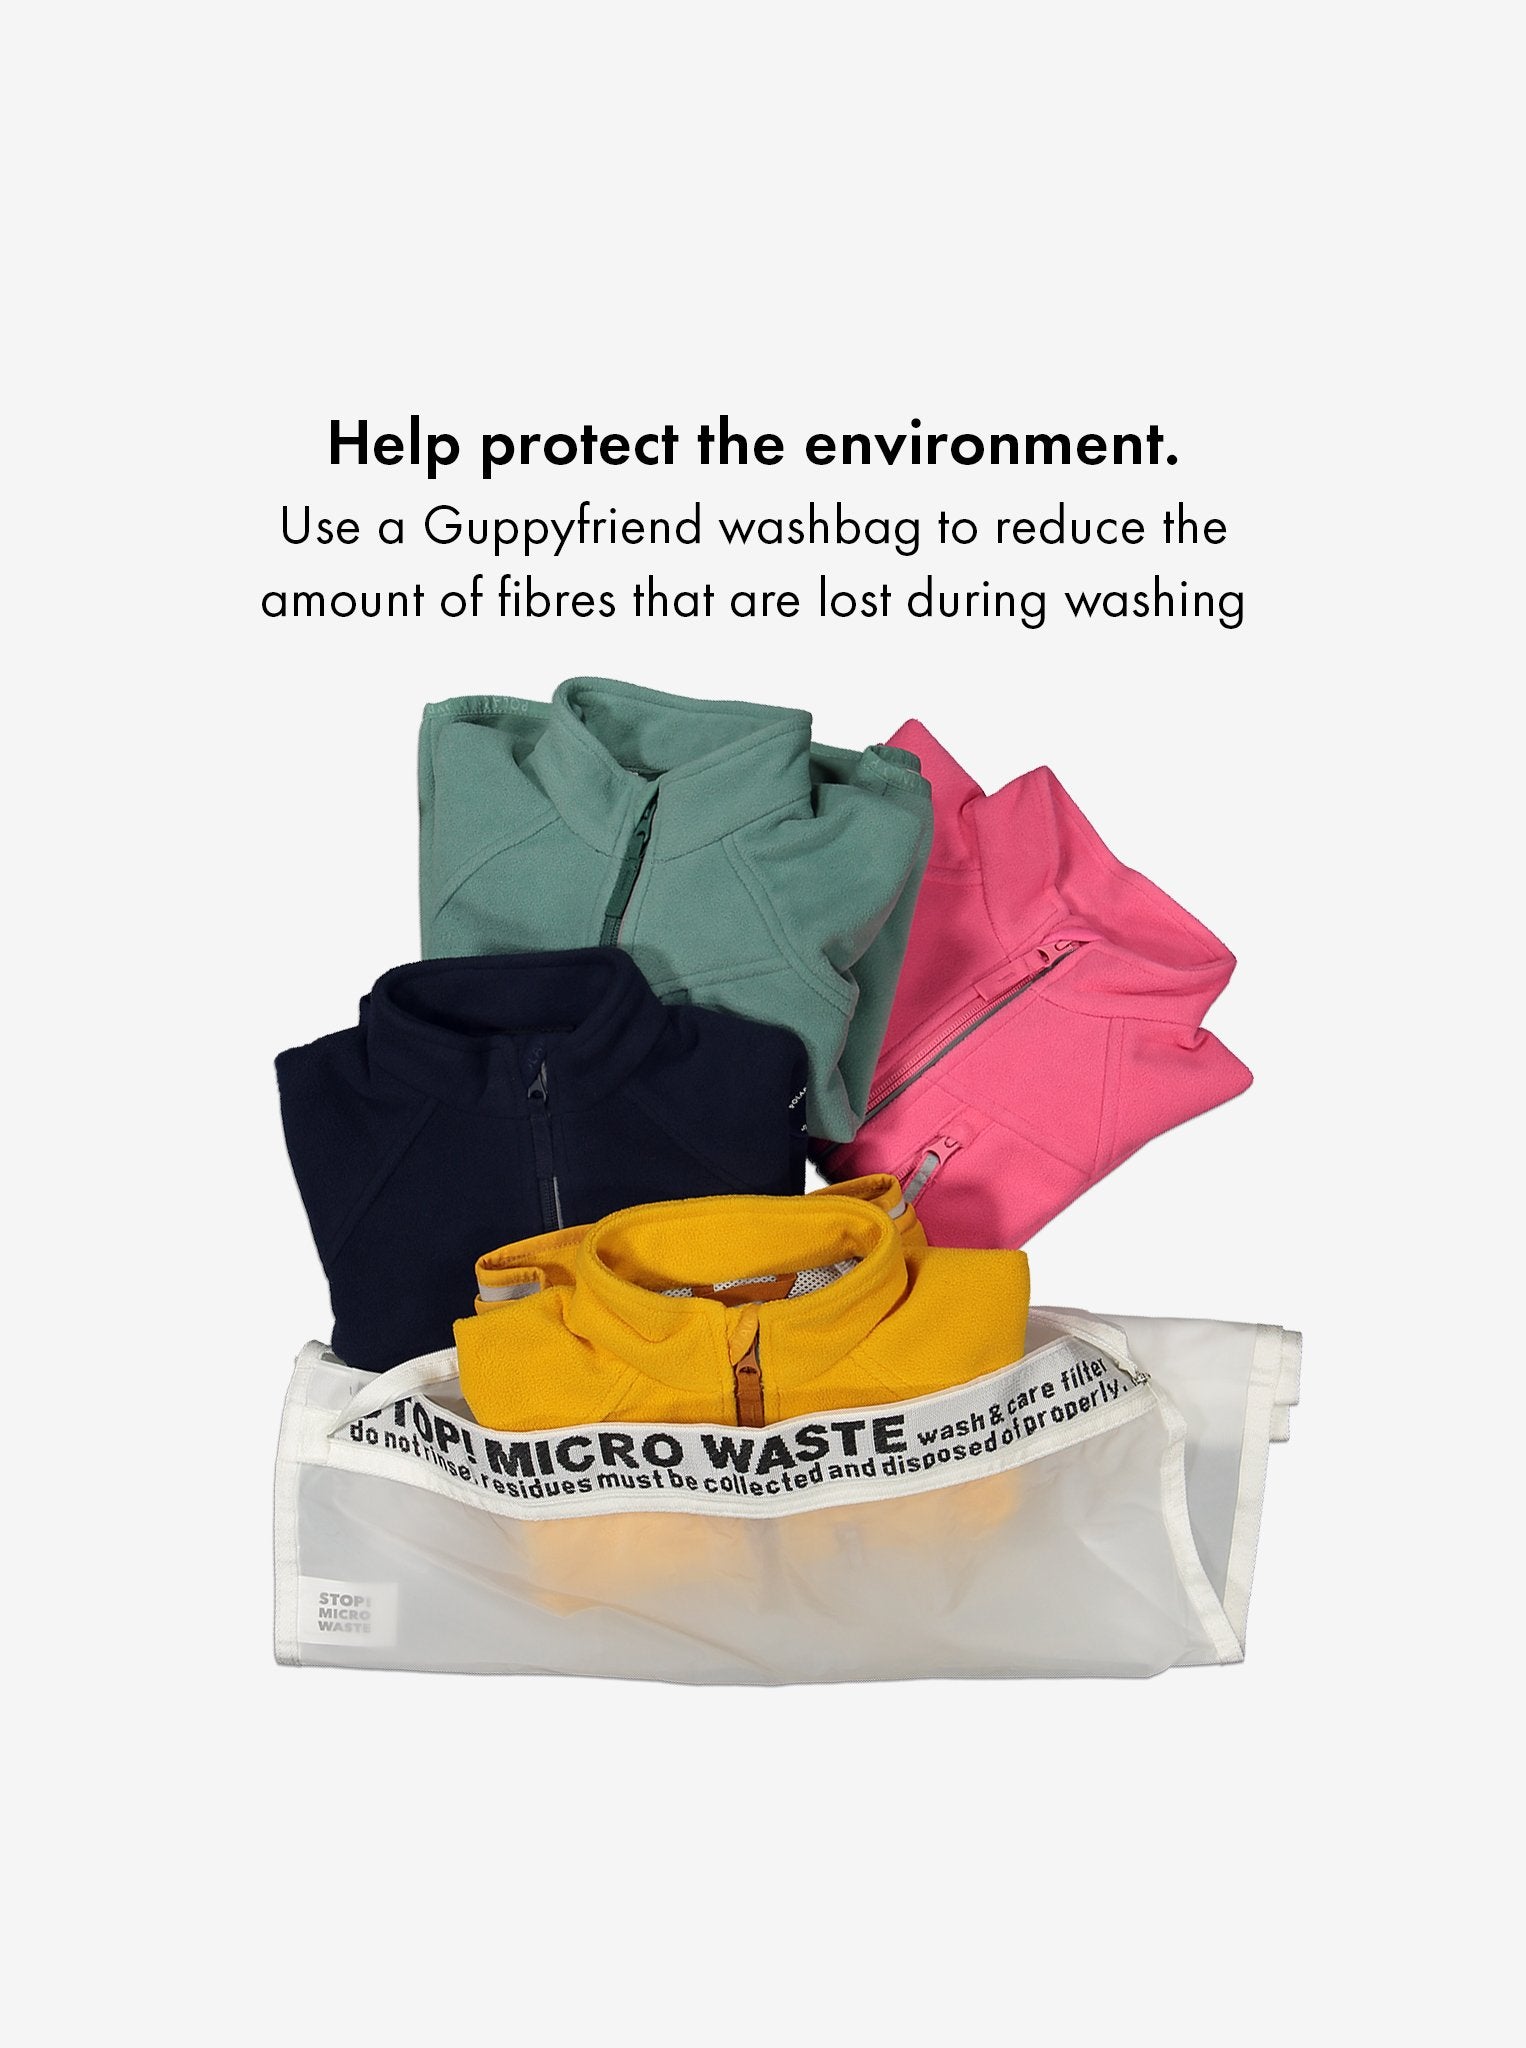 Waterproof, kids fleece jacket in green, pink, navy, and yellow place in an eco-friendly, Guppyfriend washbag.